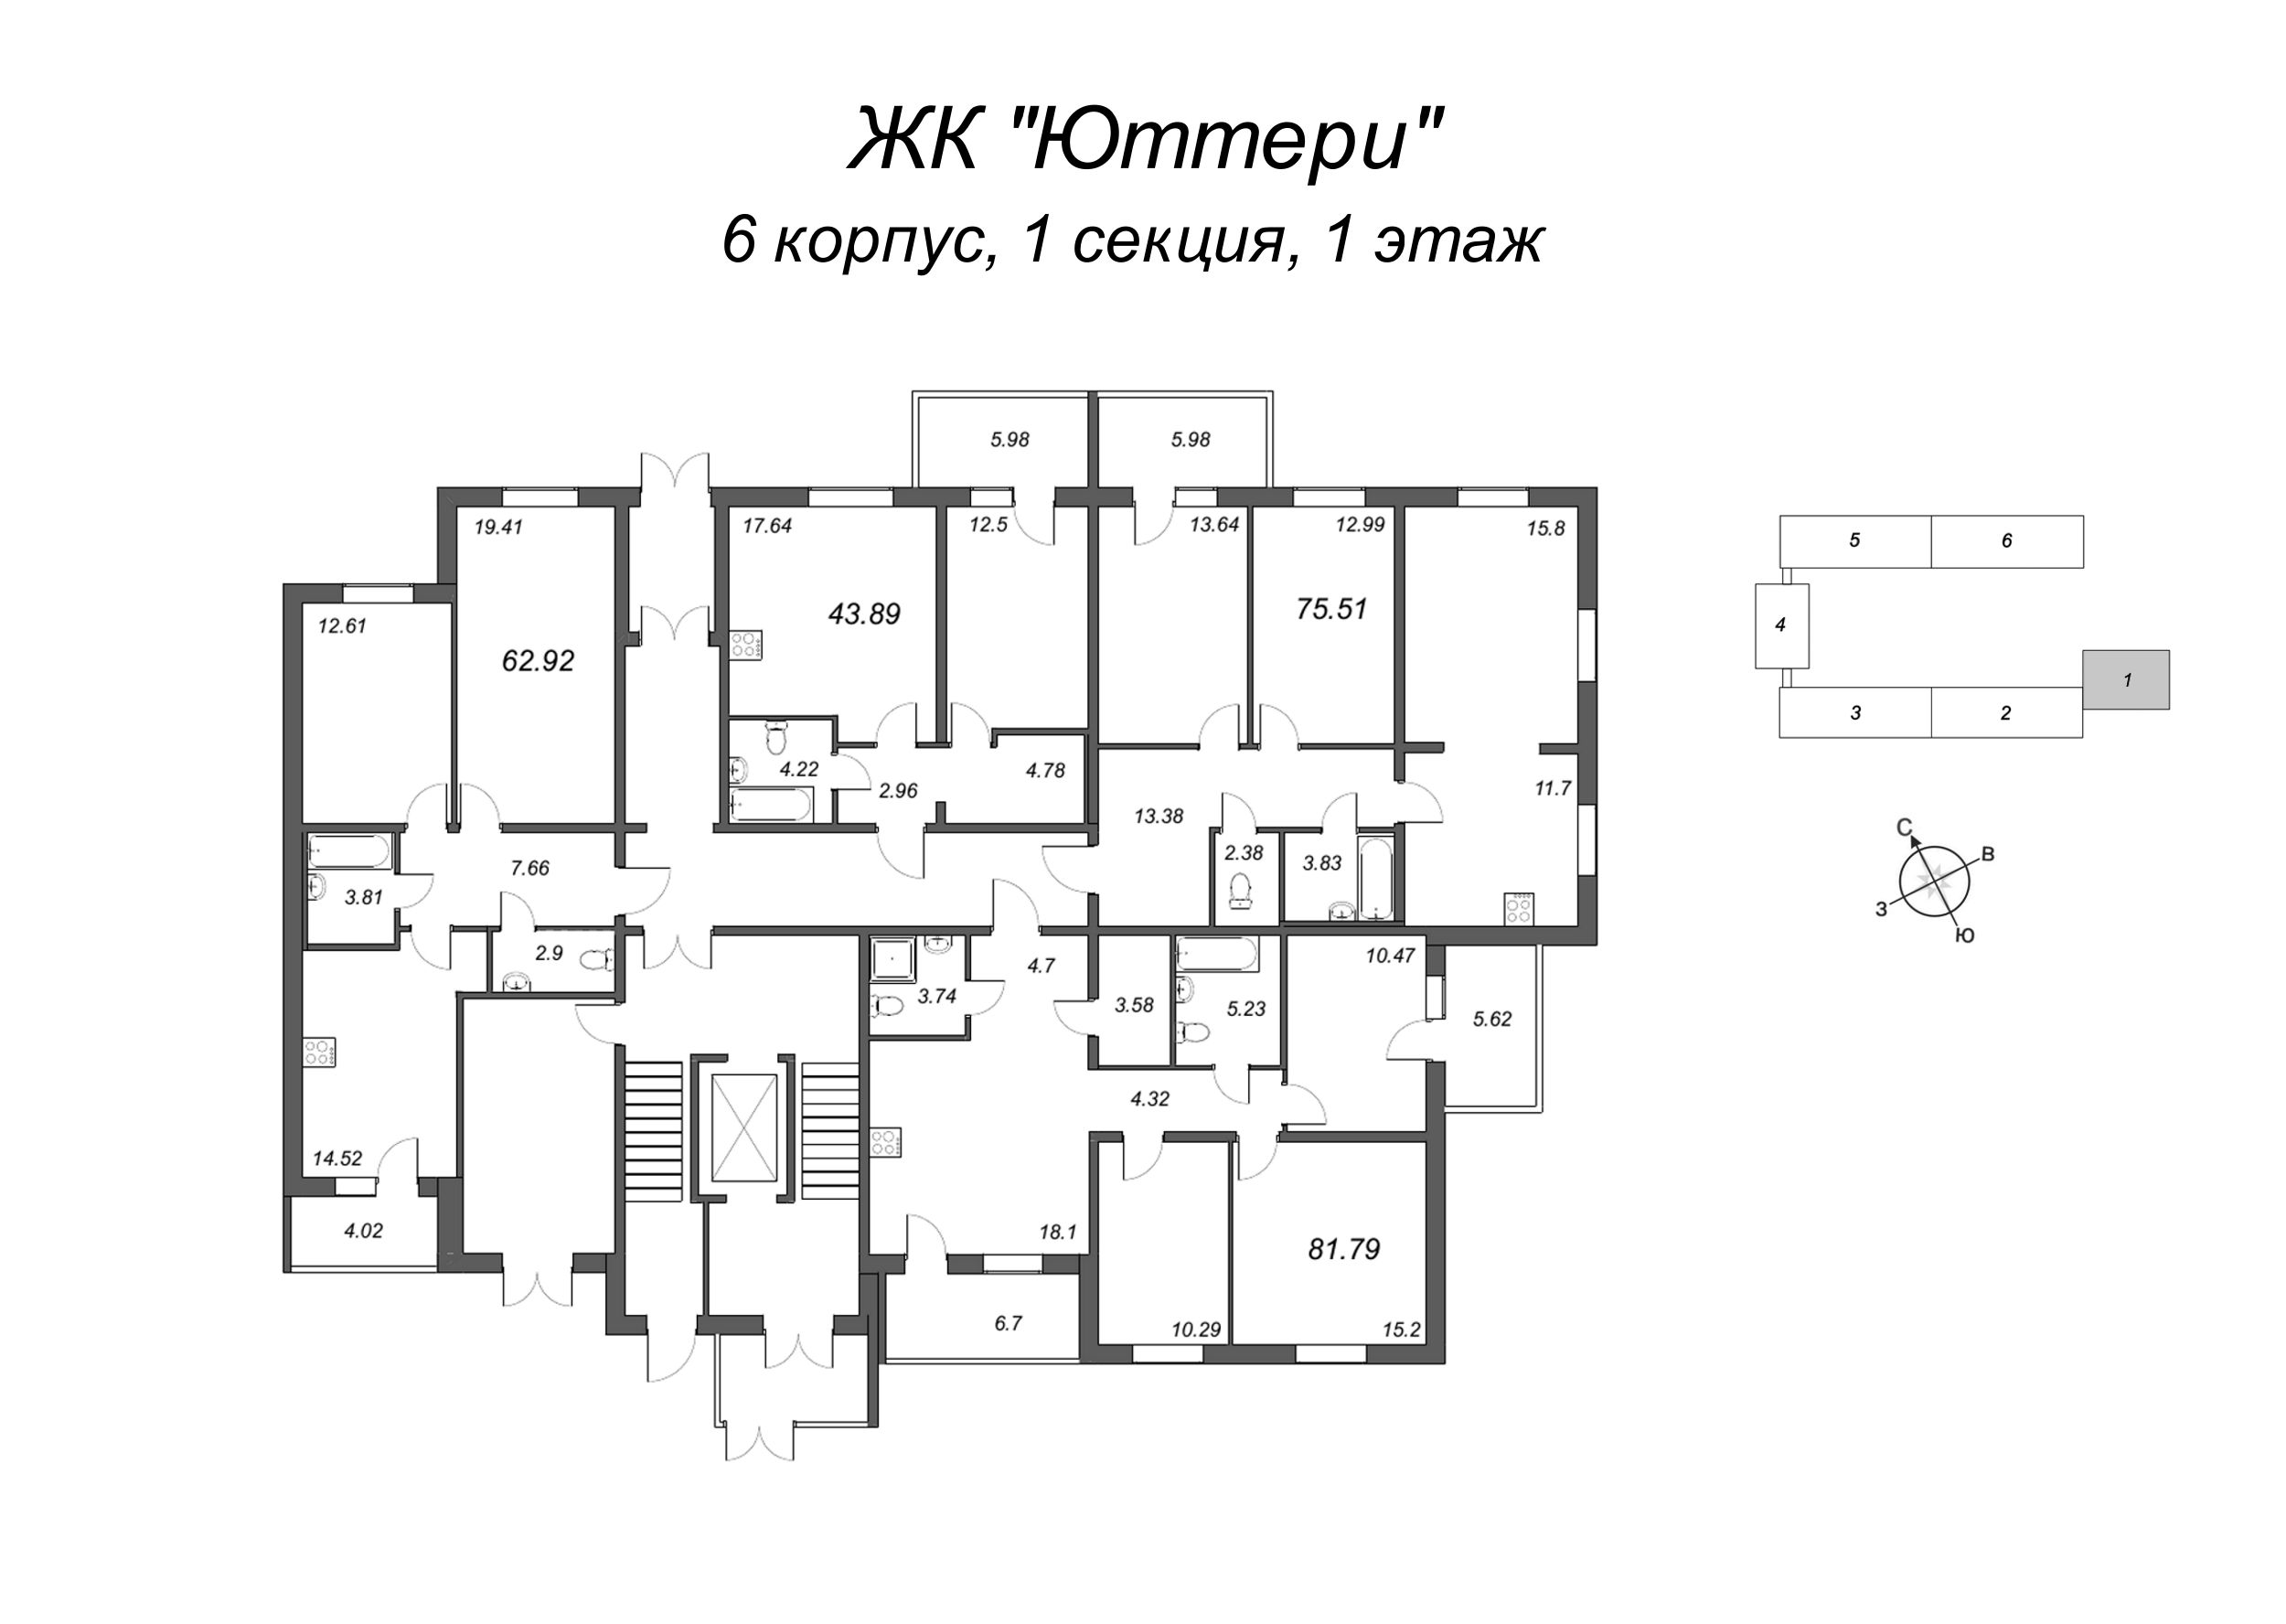 3-комнатная (Евро) квартира, 73.72 м² - планировка этажа